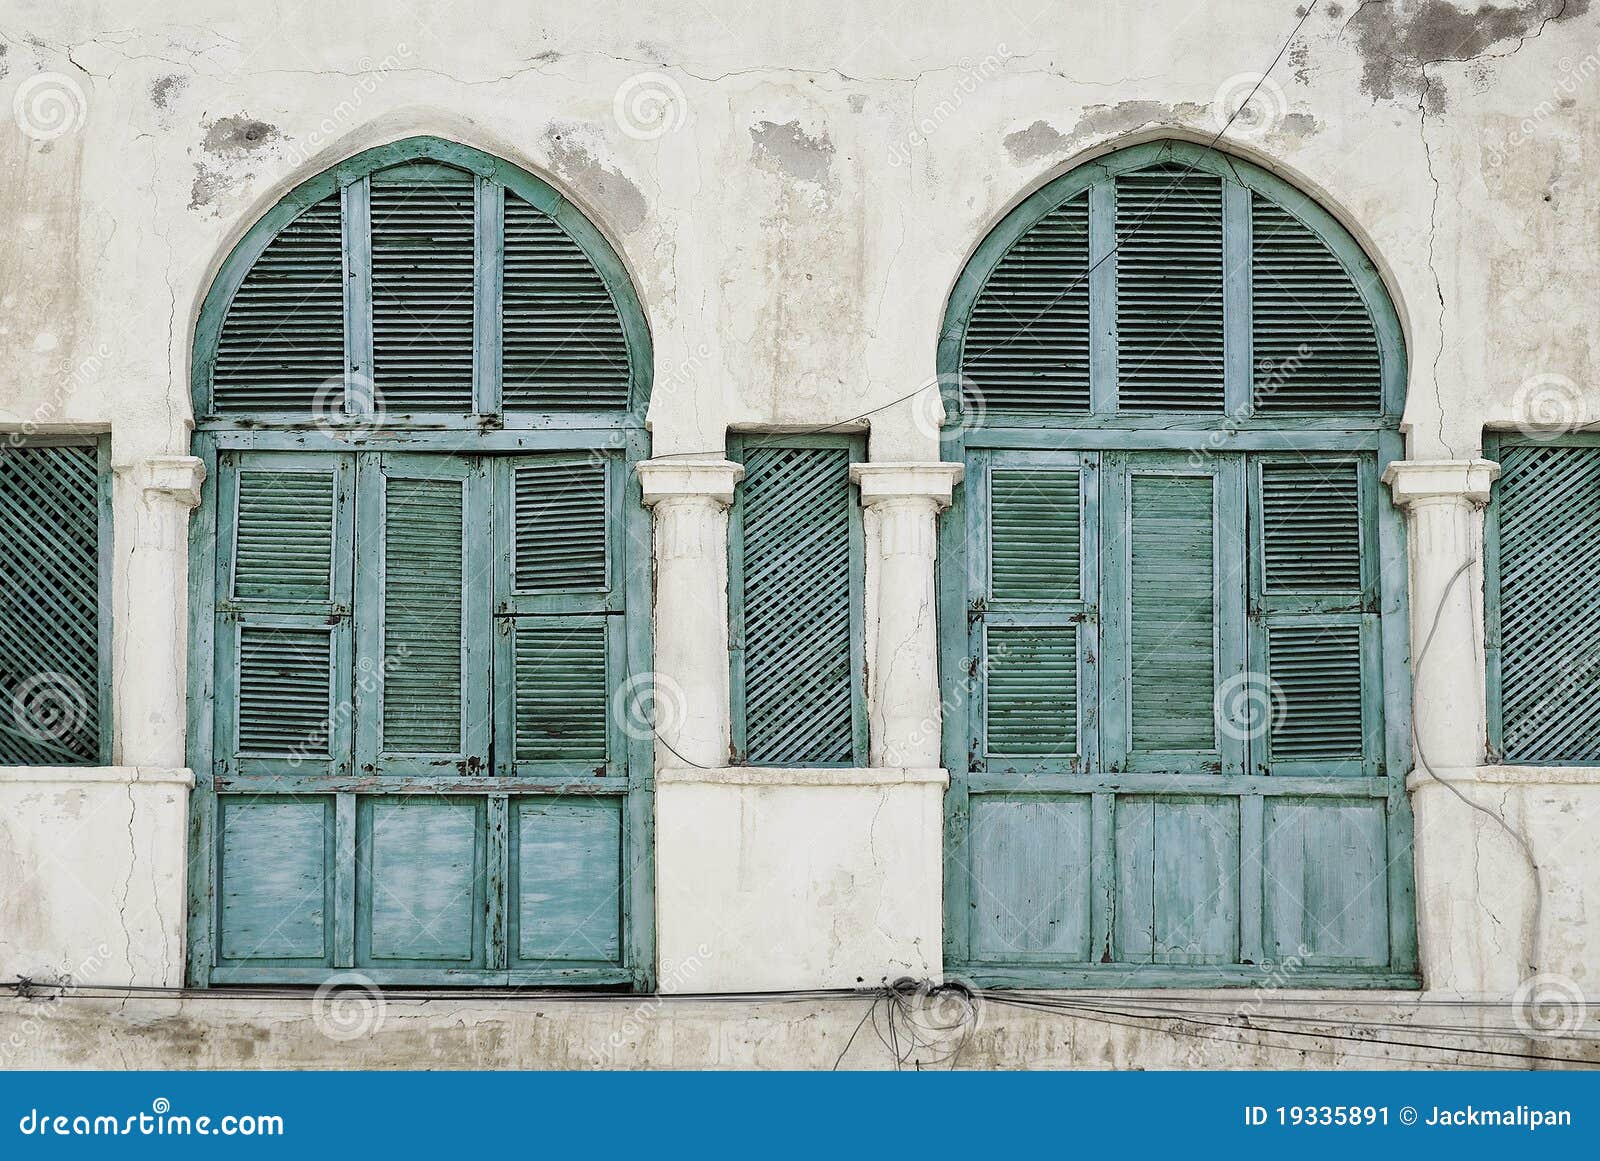 windows in massawa eritrea ottoman influence